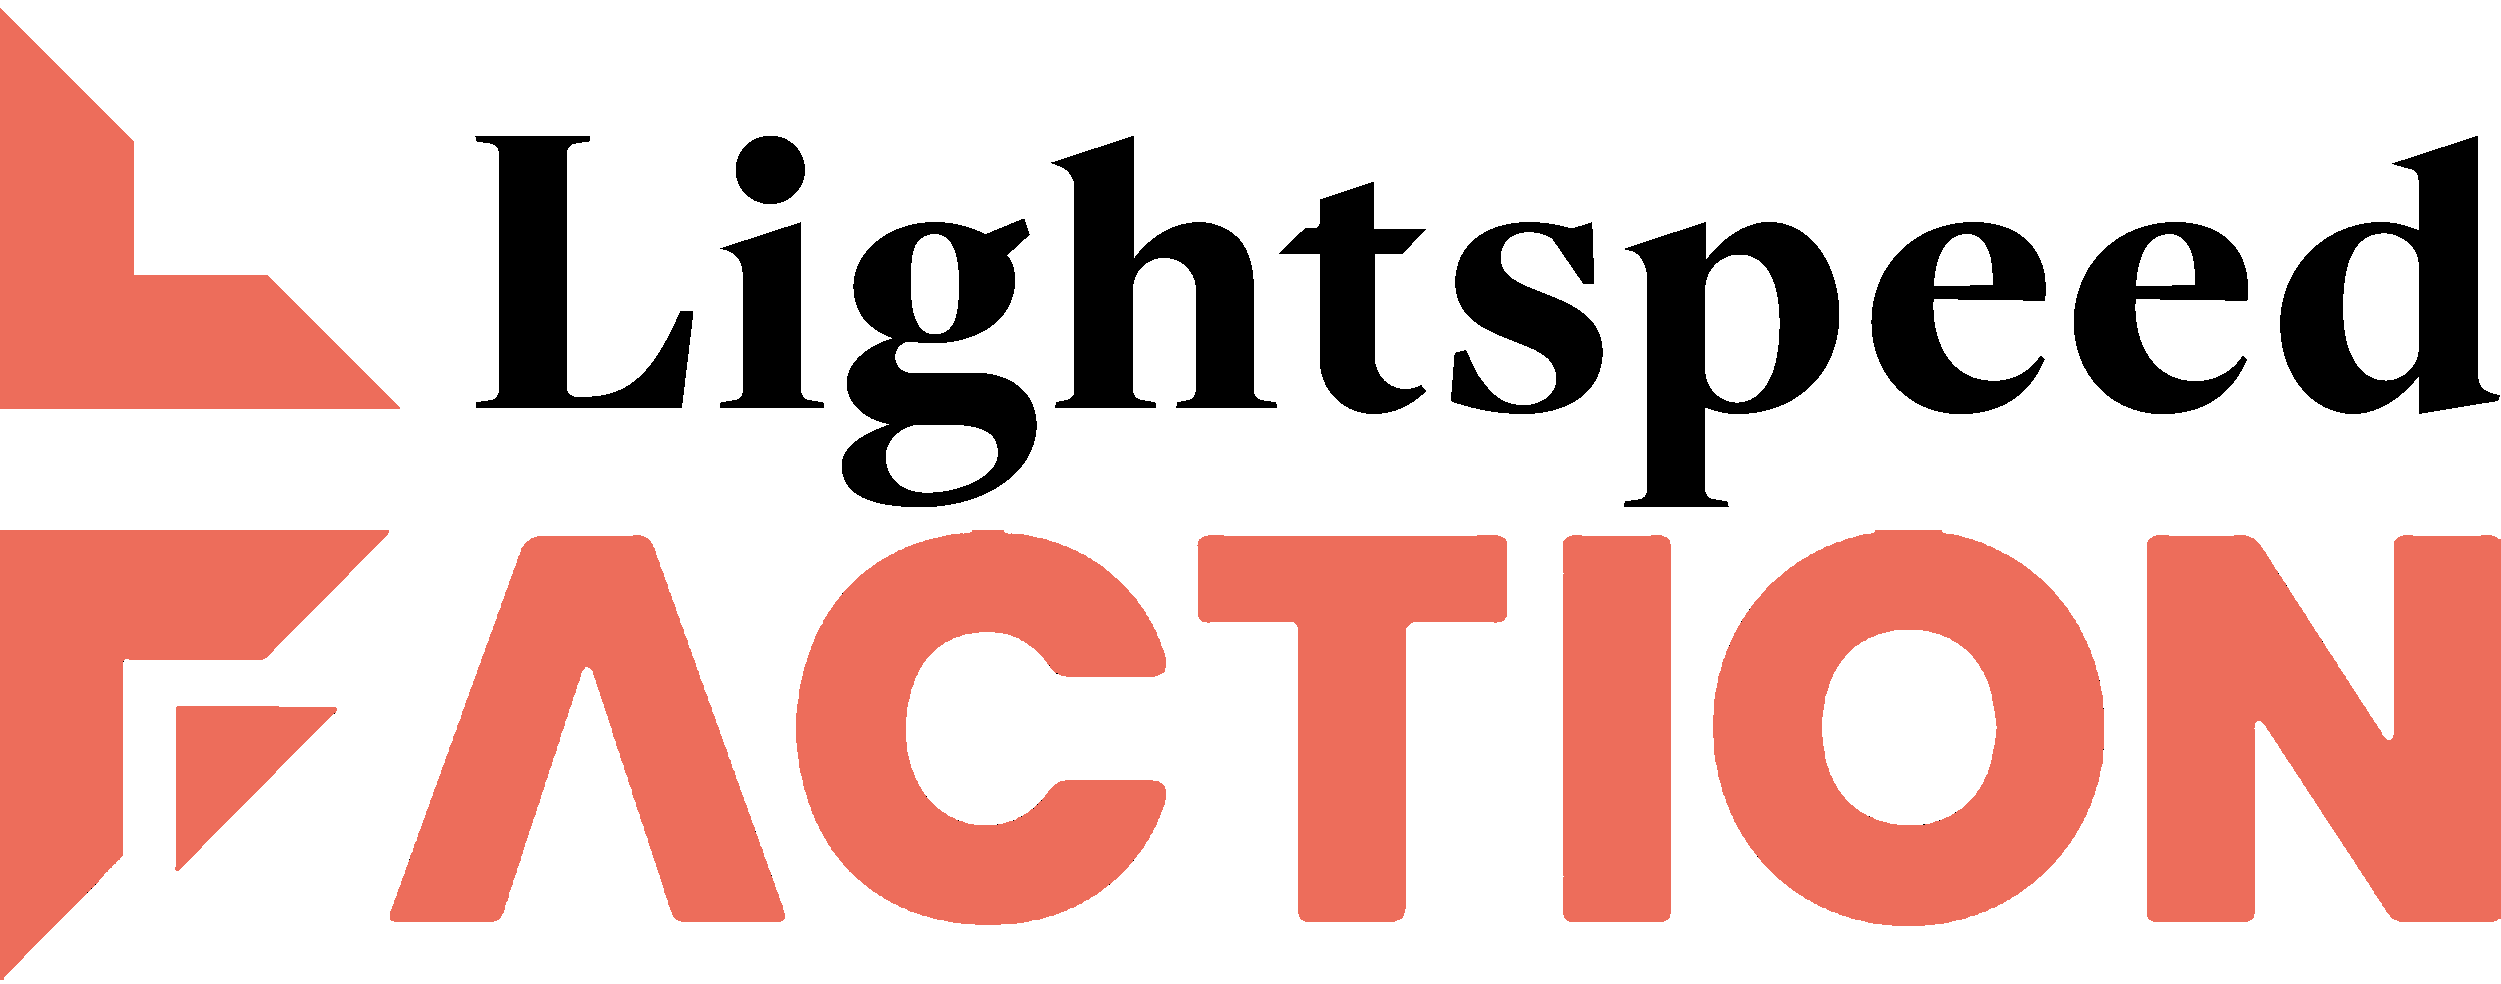 Lightspeed Faction | Lead investor